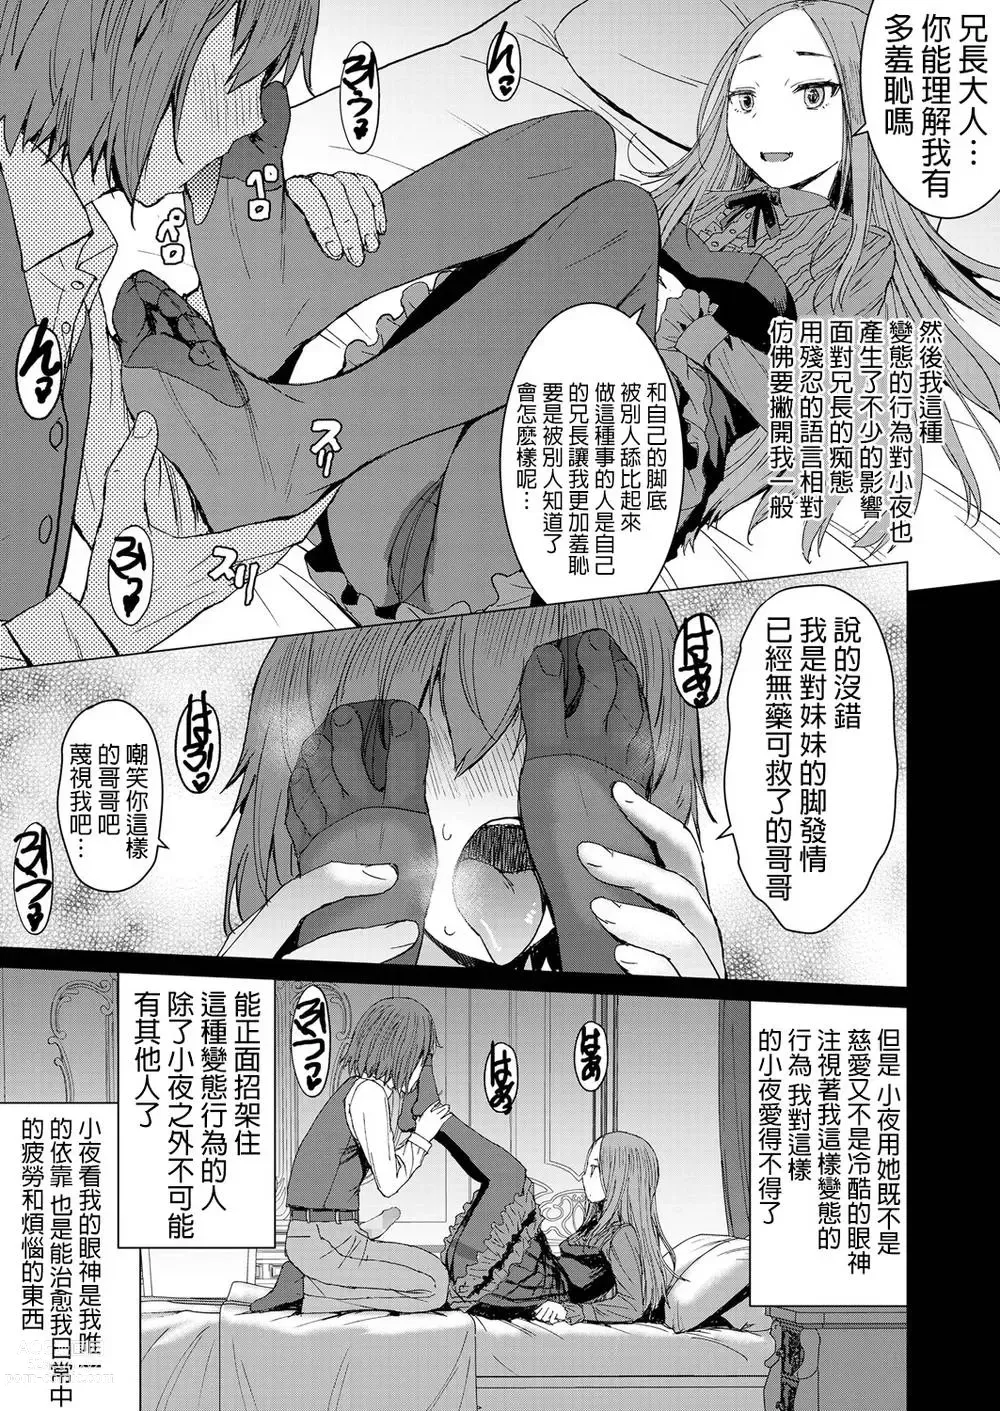 Page 13 of manga Aisarete Miru?